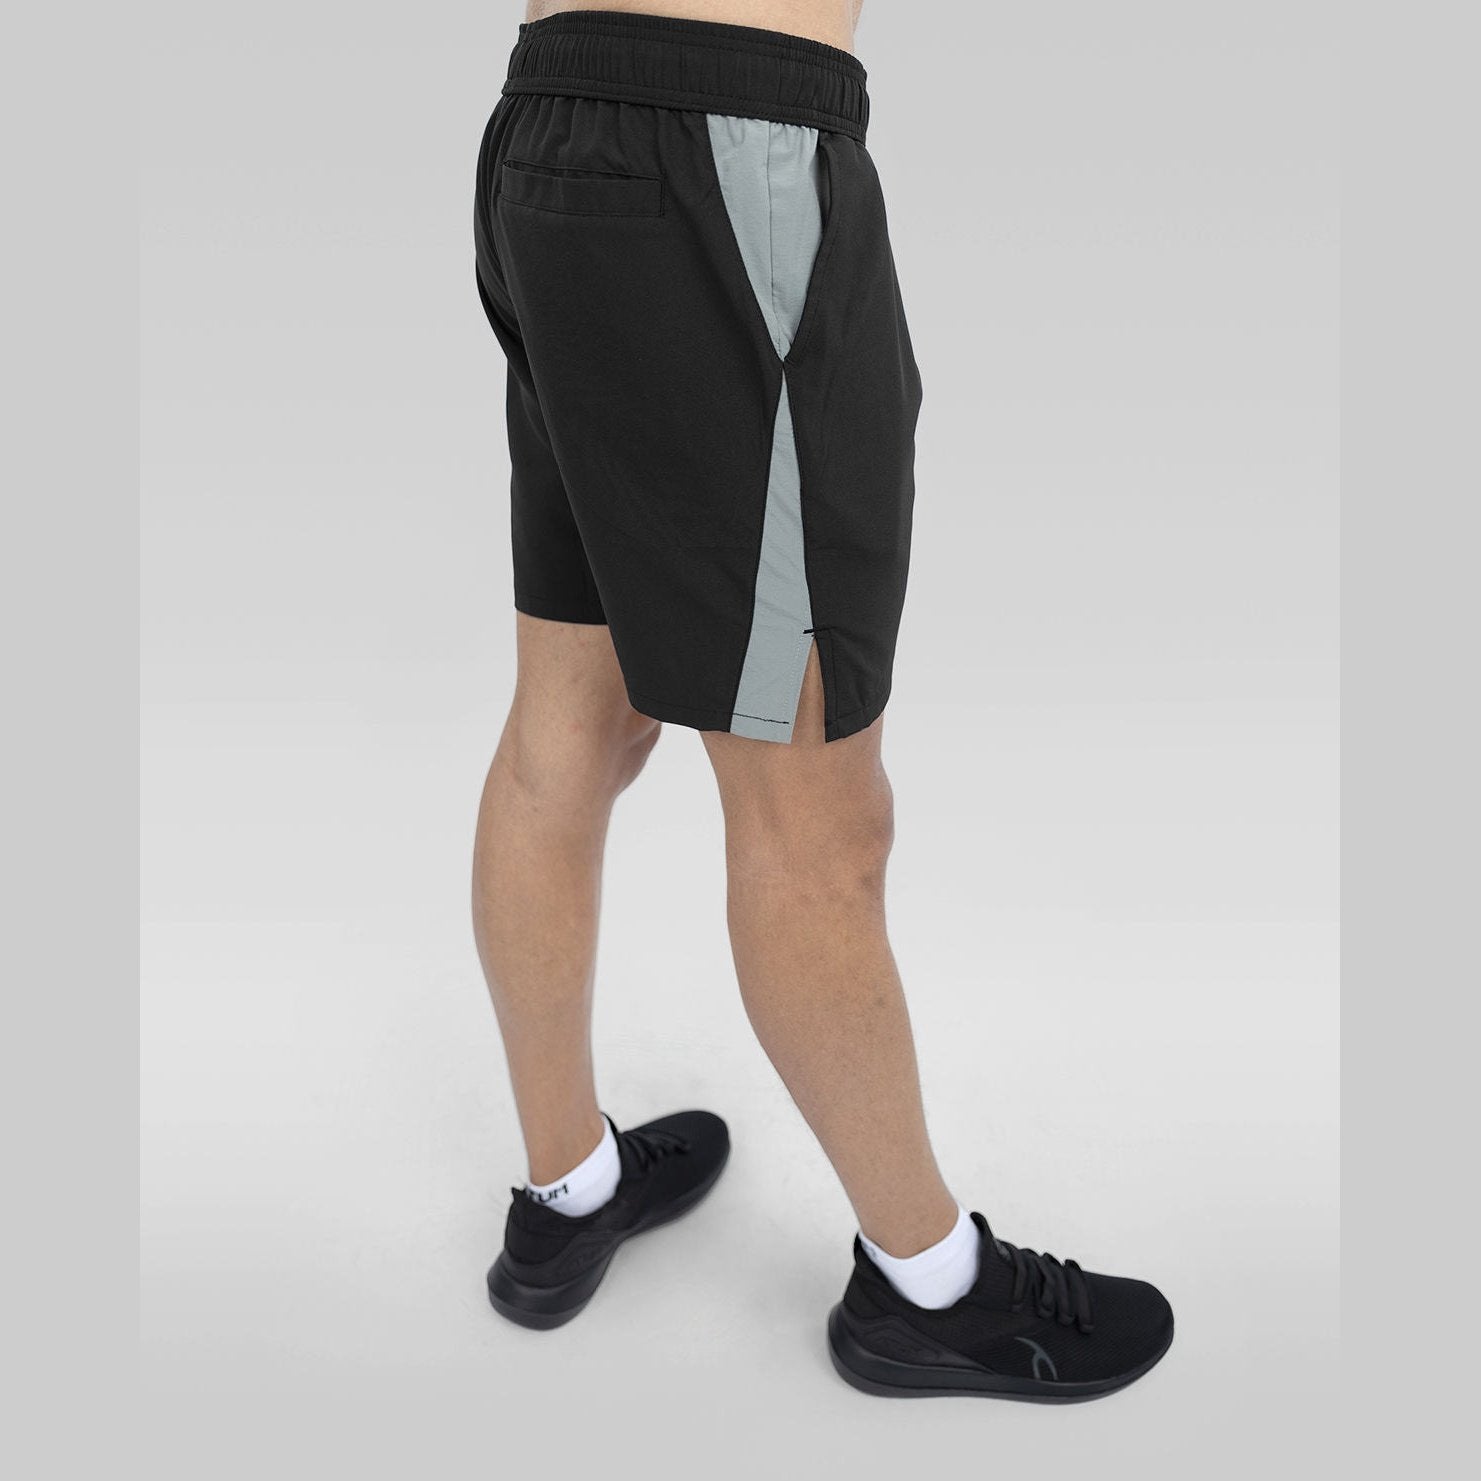 Atum men's Dust power shorts